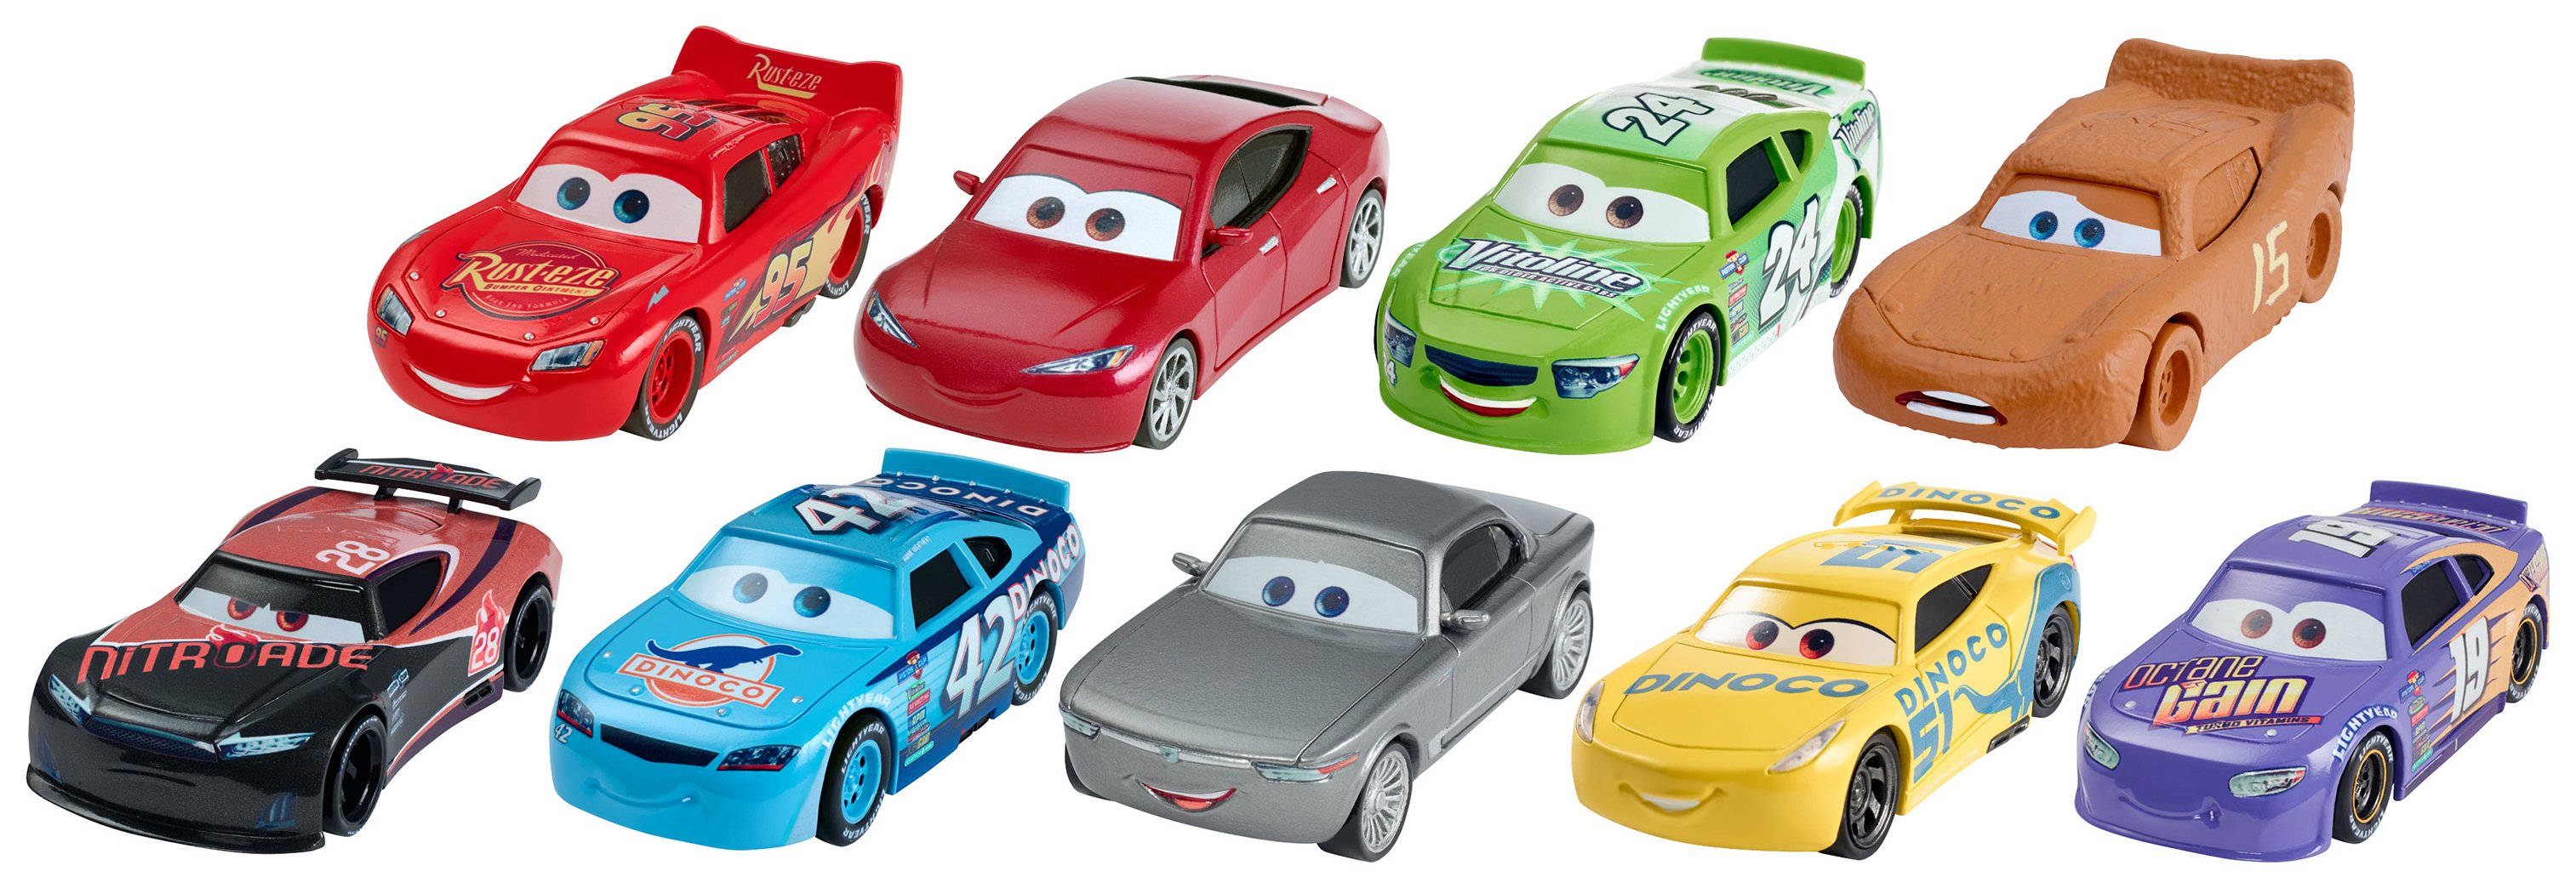 argos cars toys